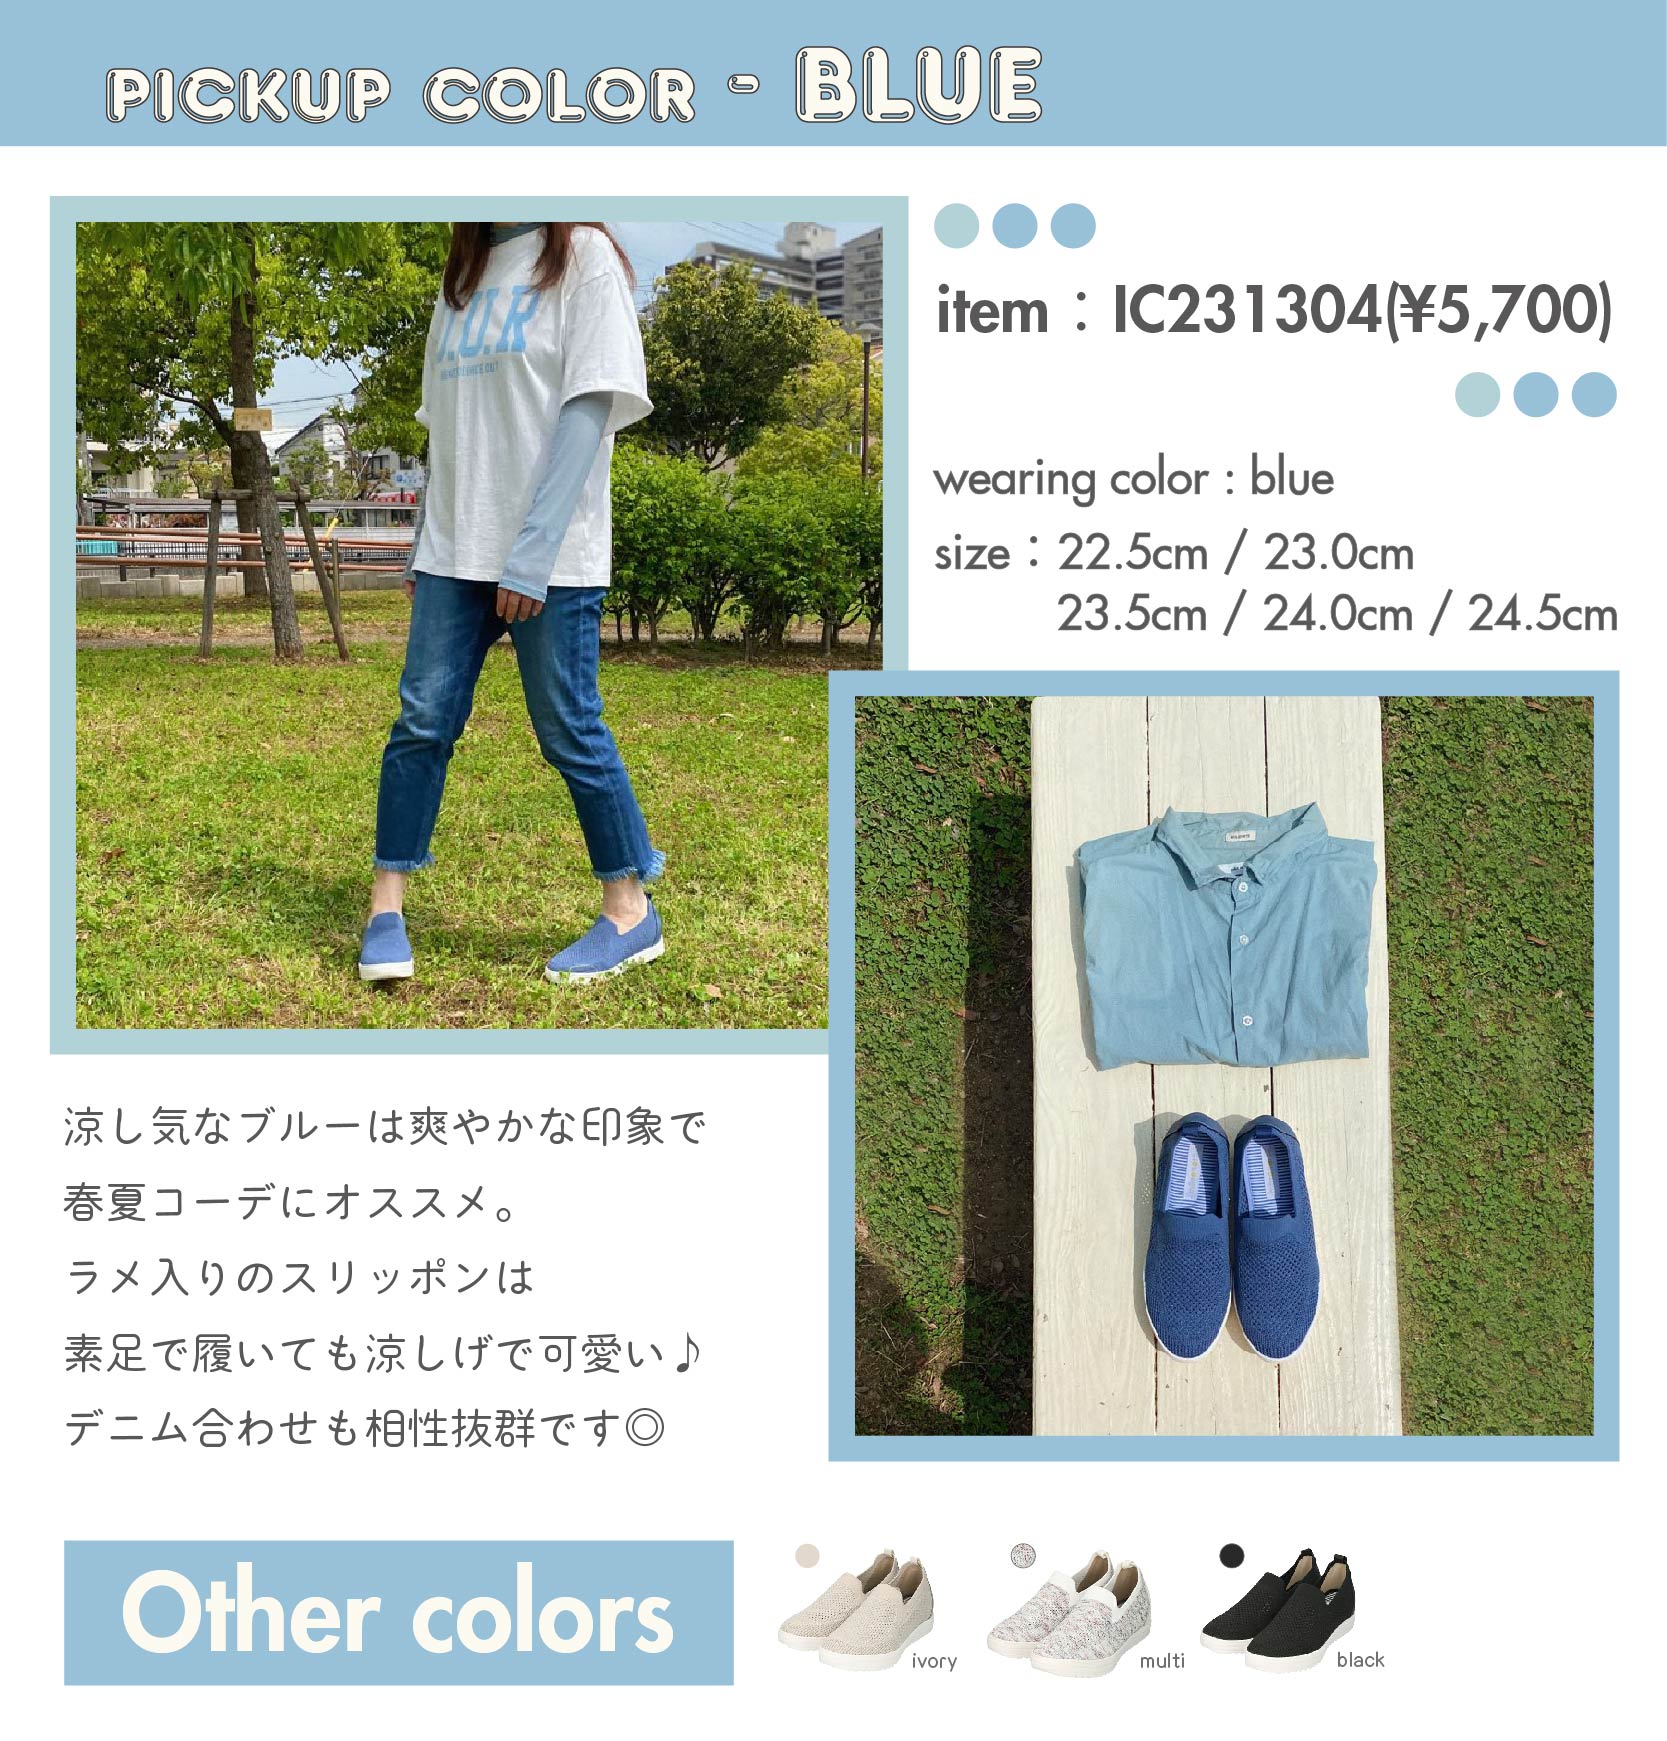 PICKUP COLOR-BLUE　item：IC231304(¥5,700) color：blue　size：22.5cm / 23.0cm / 23.5cm / 24.0cm / 24.5cm　涼し気なブルーは爽やかな印象で 春夏コーデにオススメ。 ラメ入りのスリッポンは 素足で履いても涼しげで可愛い♪ デニム合わせも相性抜群です◎